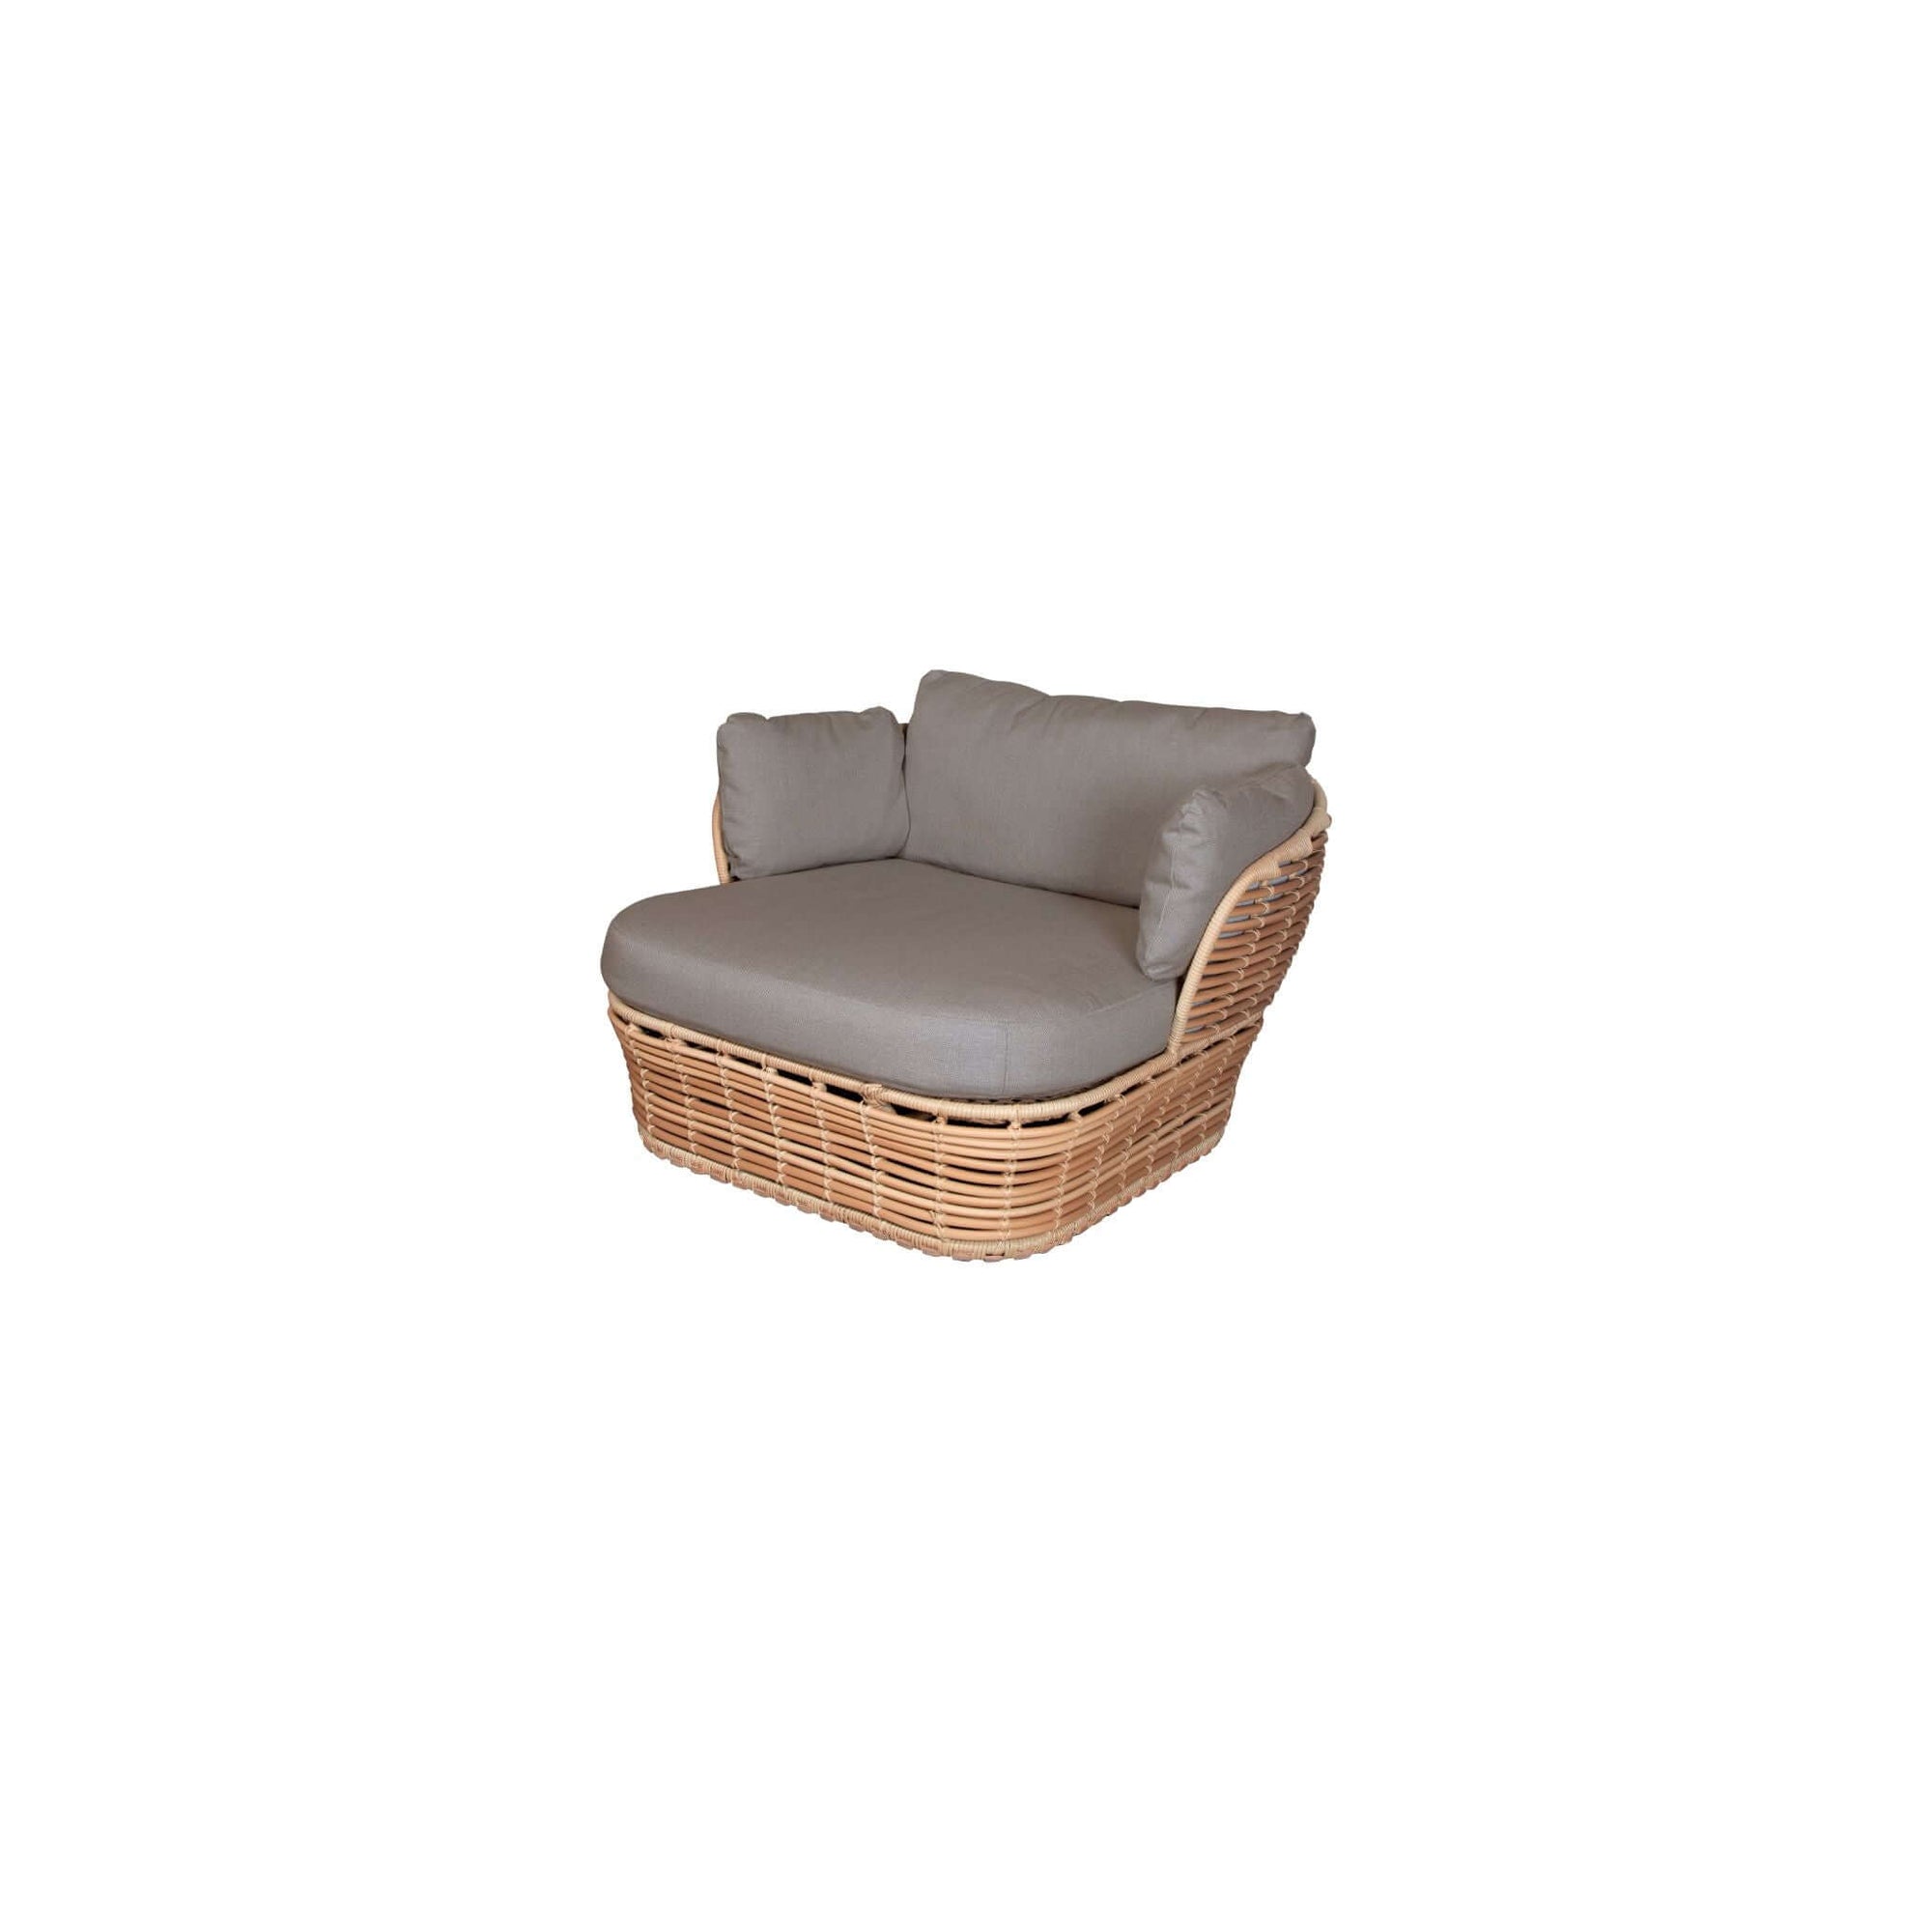 Cane-Line Basket Lounge Chair-Graphite, Cane-line Weave